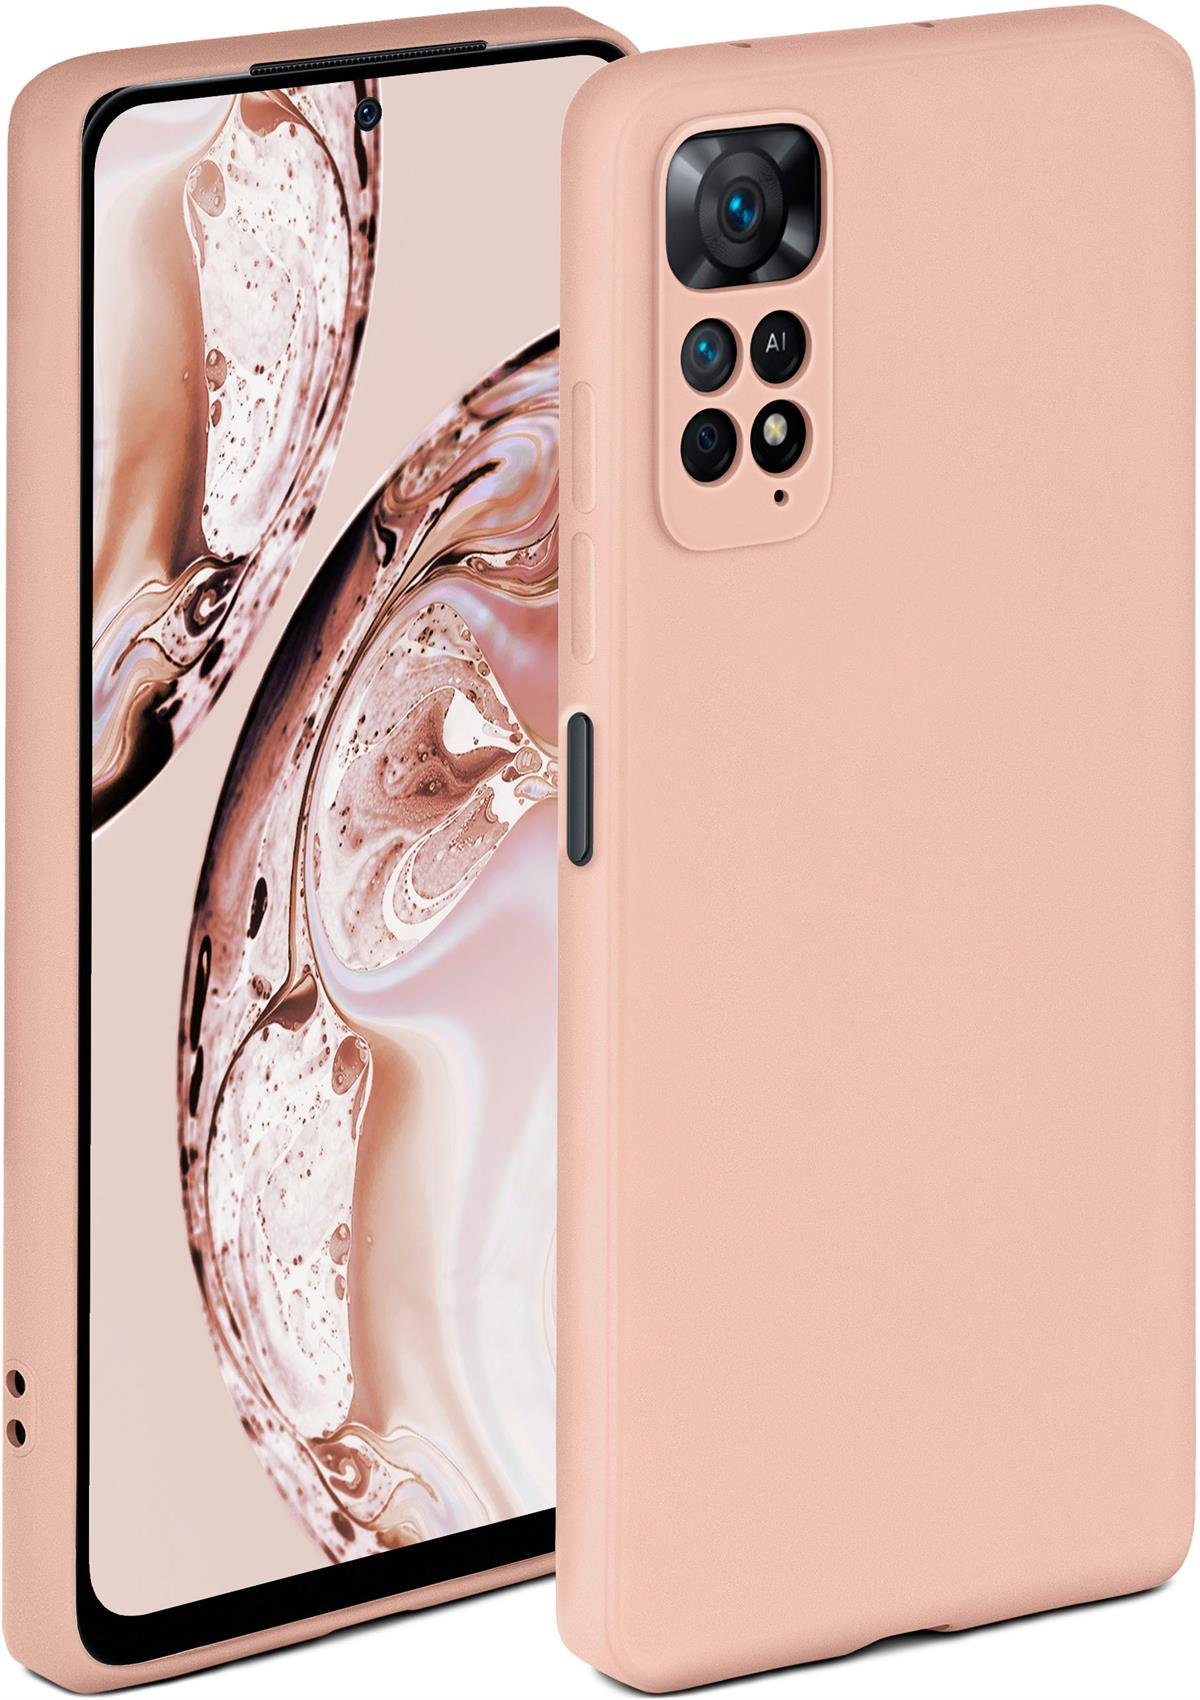 Backcover, Note 11 Sand Pro, Rosé ONEFLOW Soft Case, Redmi Xiaomi,